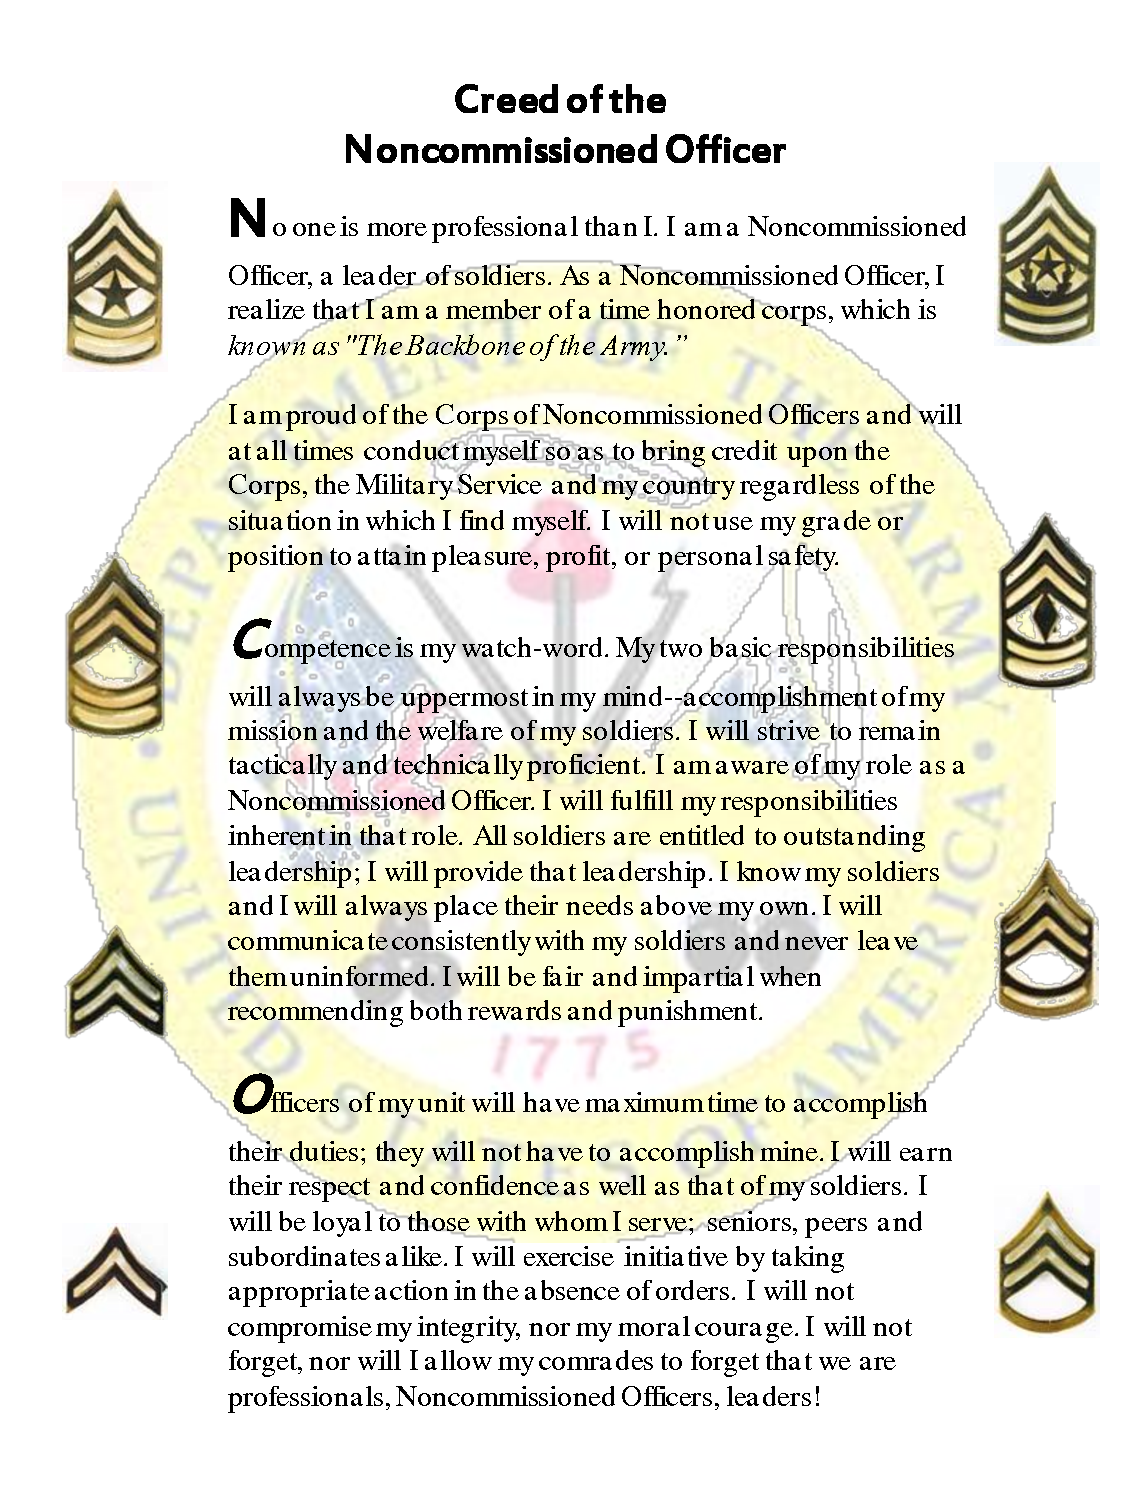 [40+] NCO Creed Wallpaper on WallpaperSafari